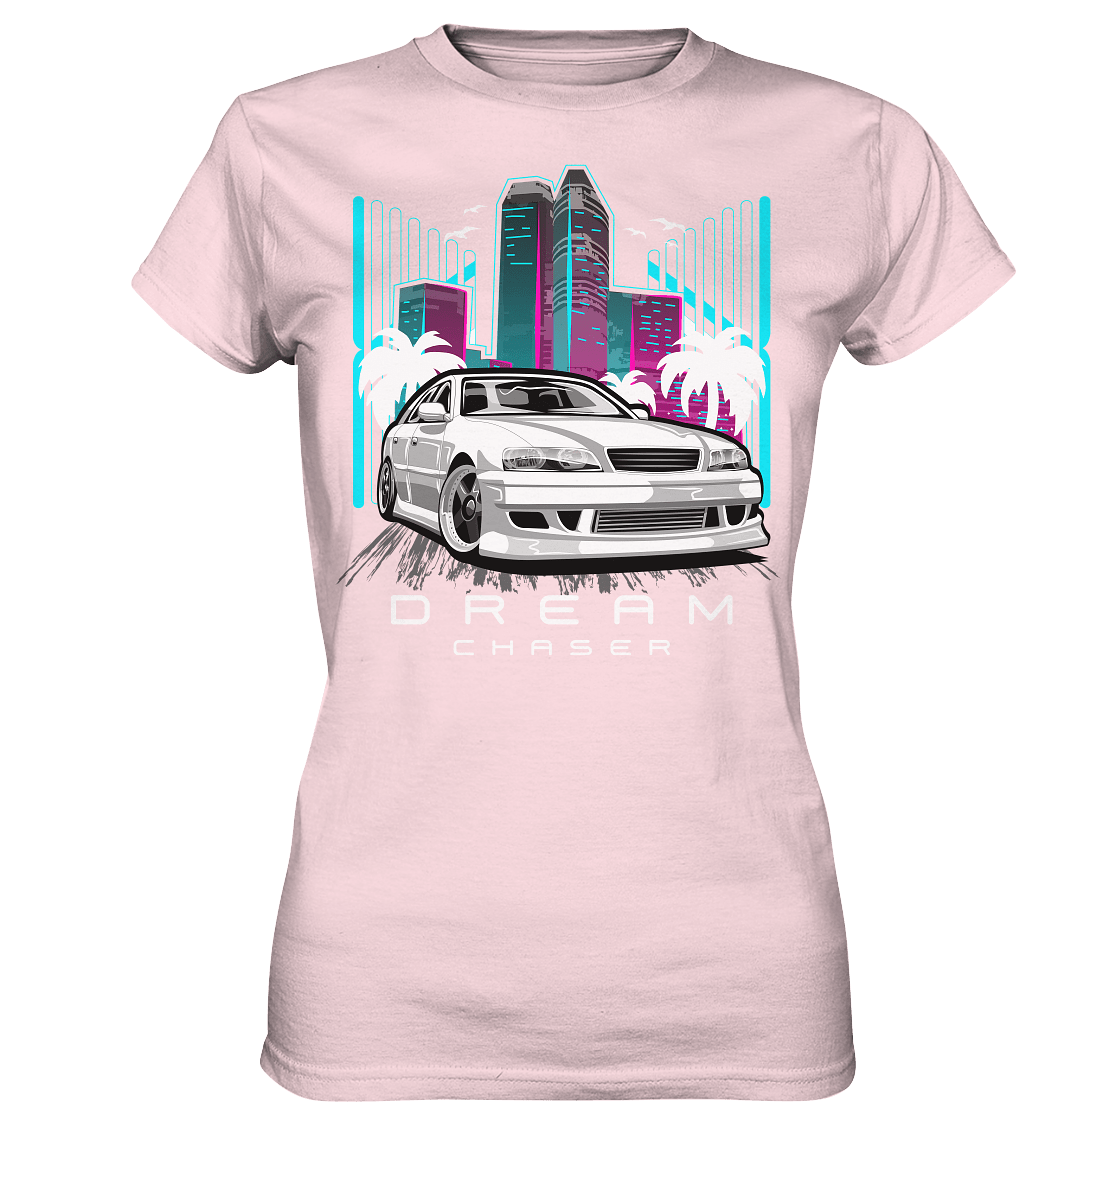 Toyota Chaser - Ladies Premium Shirt - MotoMerch.de